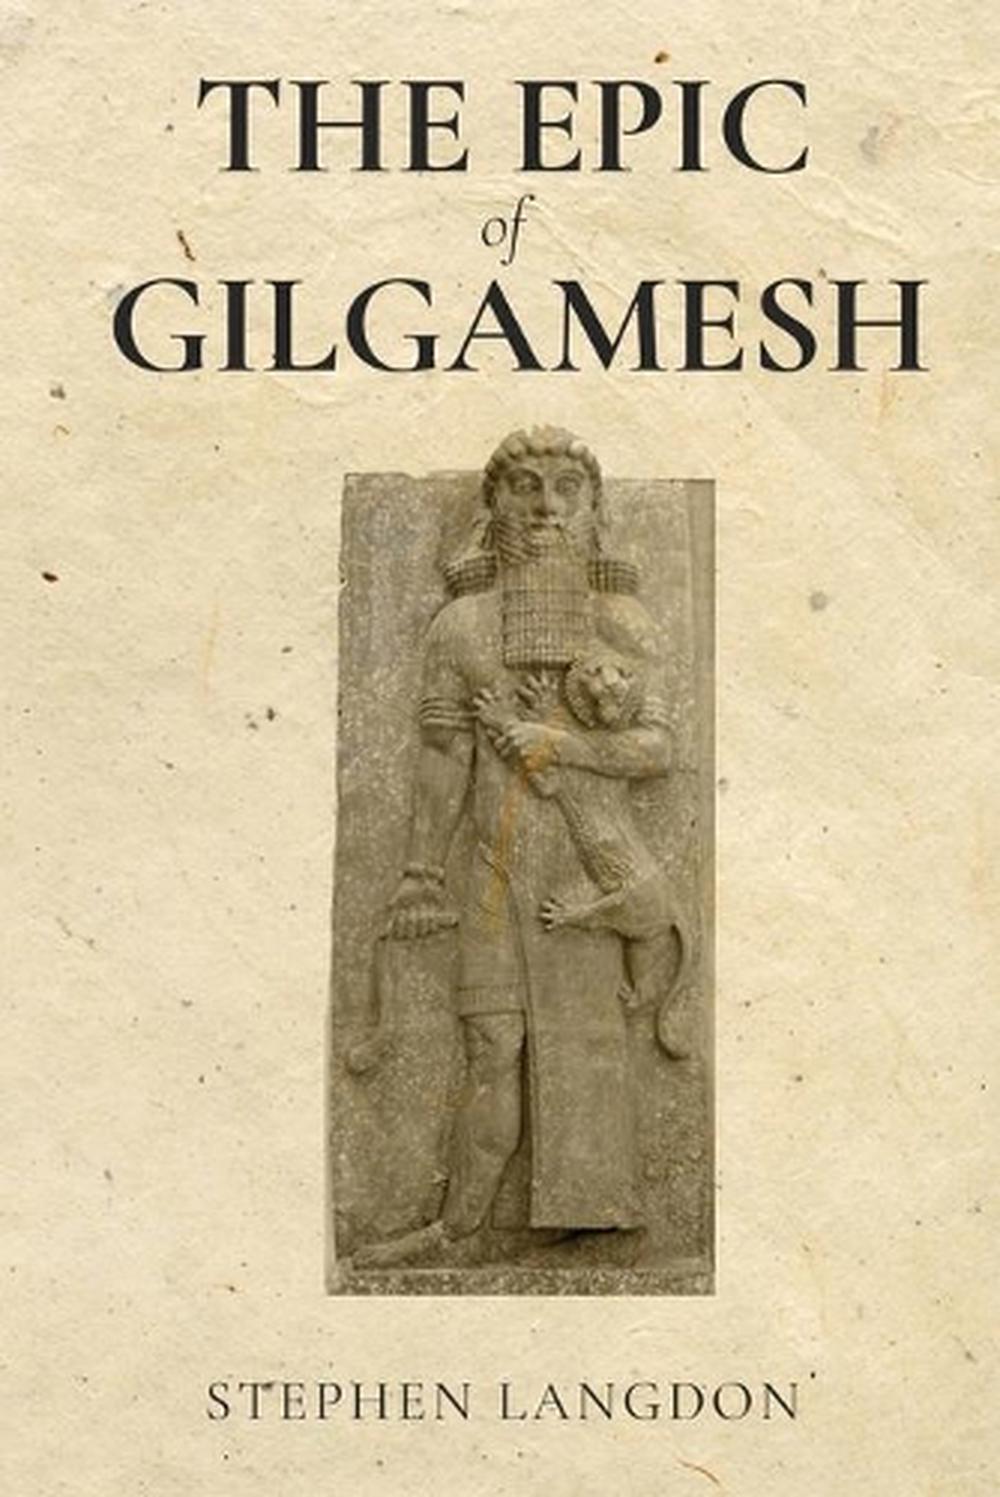 the epic of gilgamesh summary essay